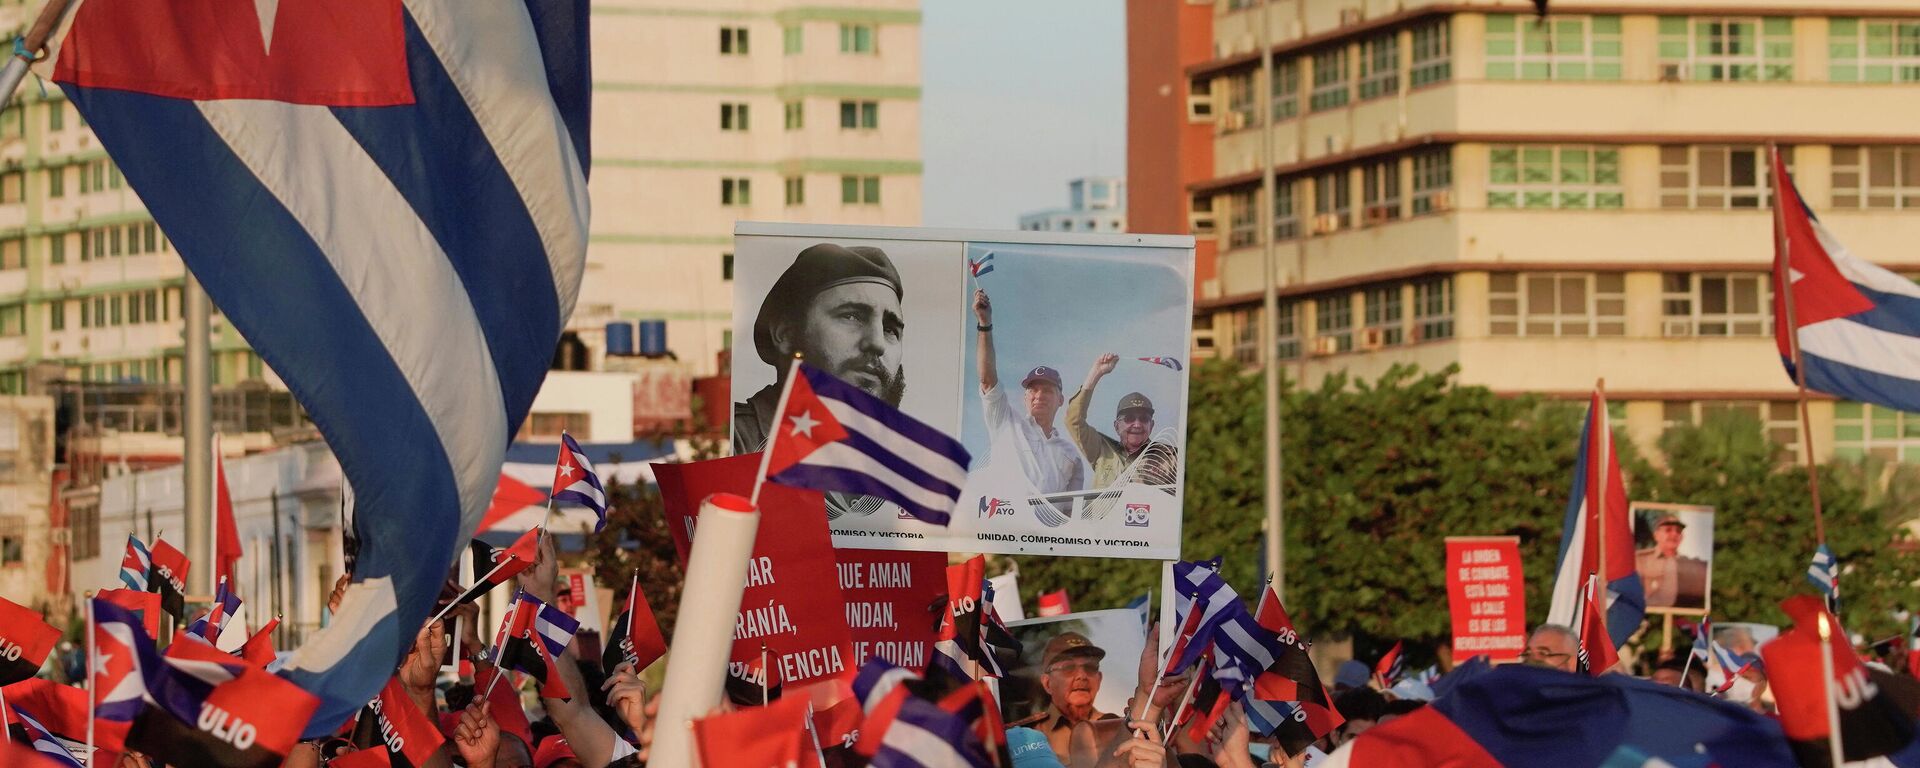 Manifestación en Cuba - Sputnik Mundo, 1920, 18.07.2021